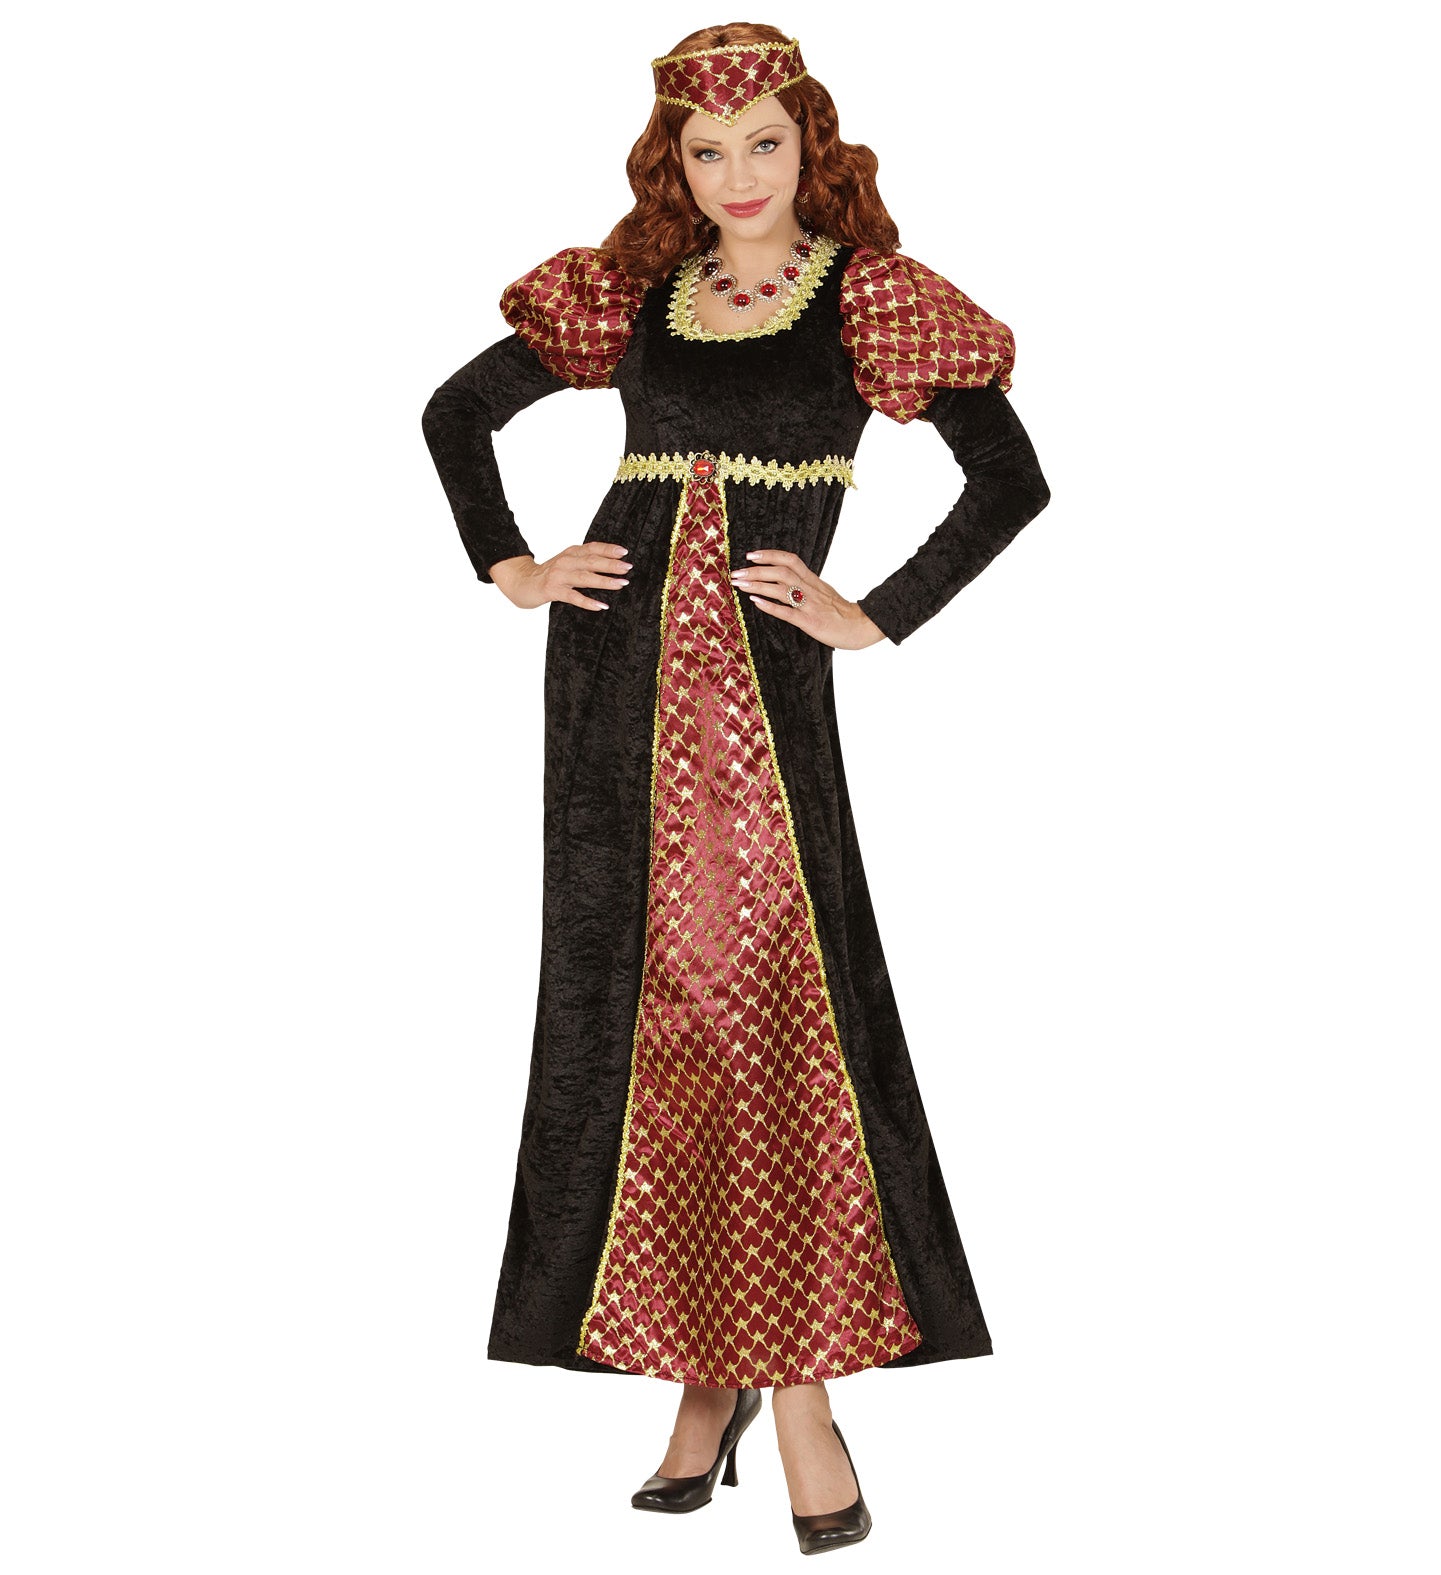 Fair Maiden Medieval dress for women